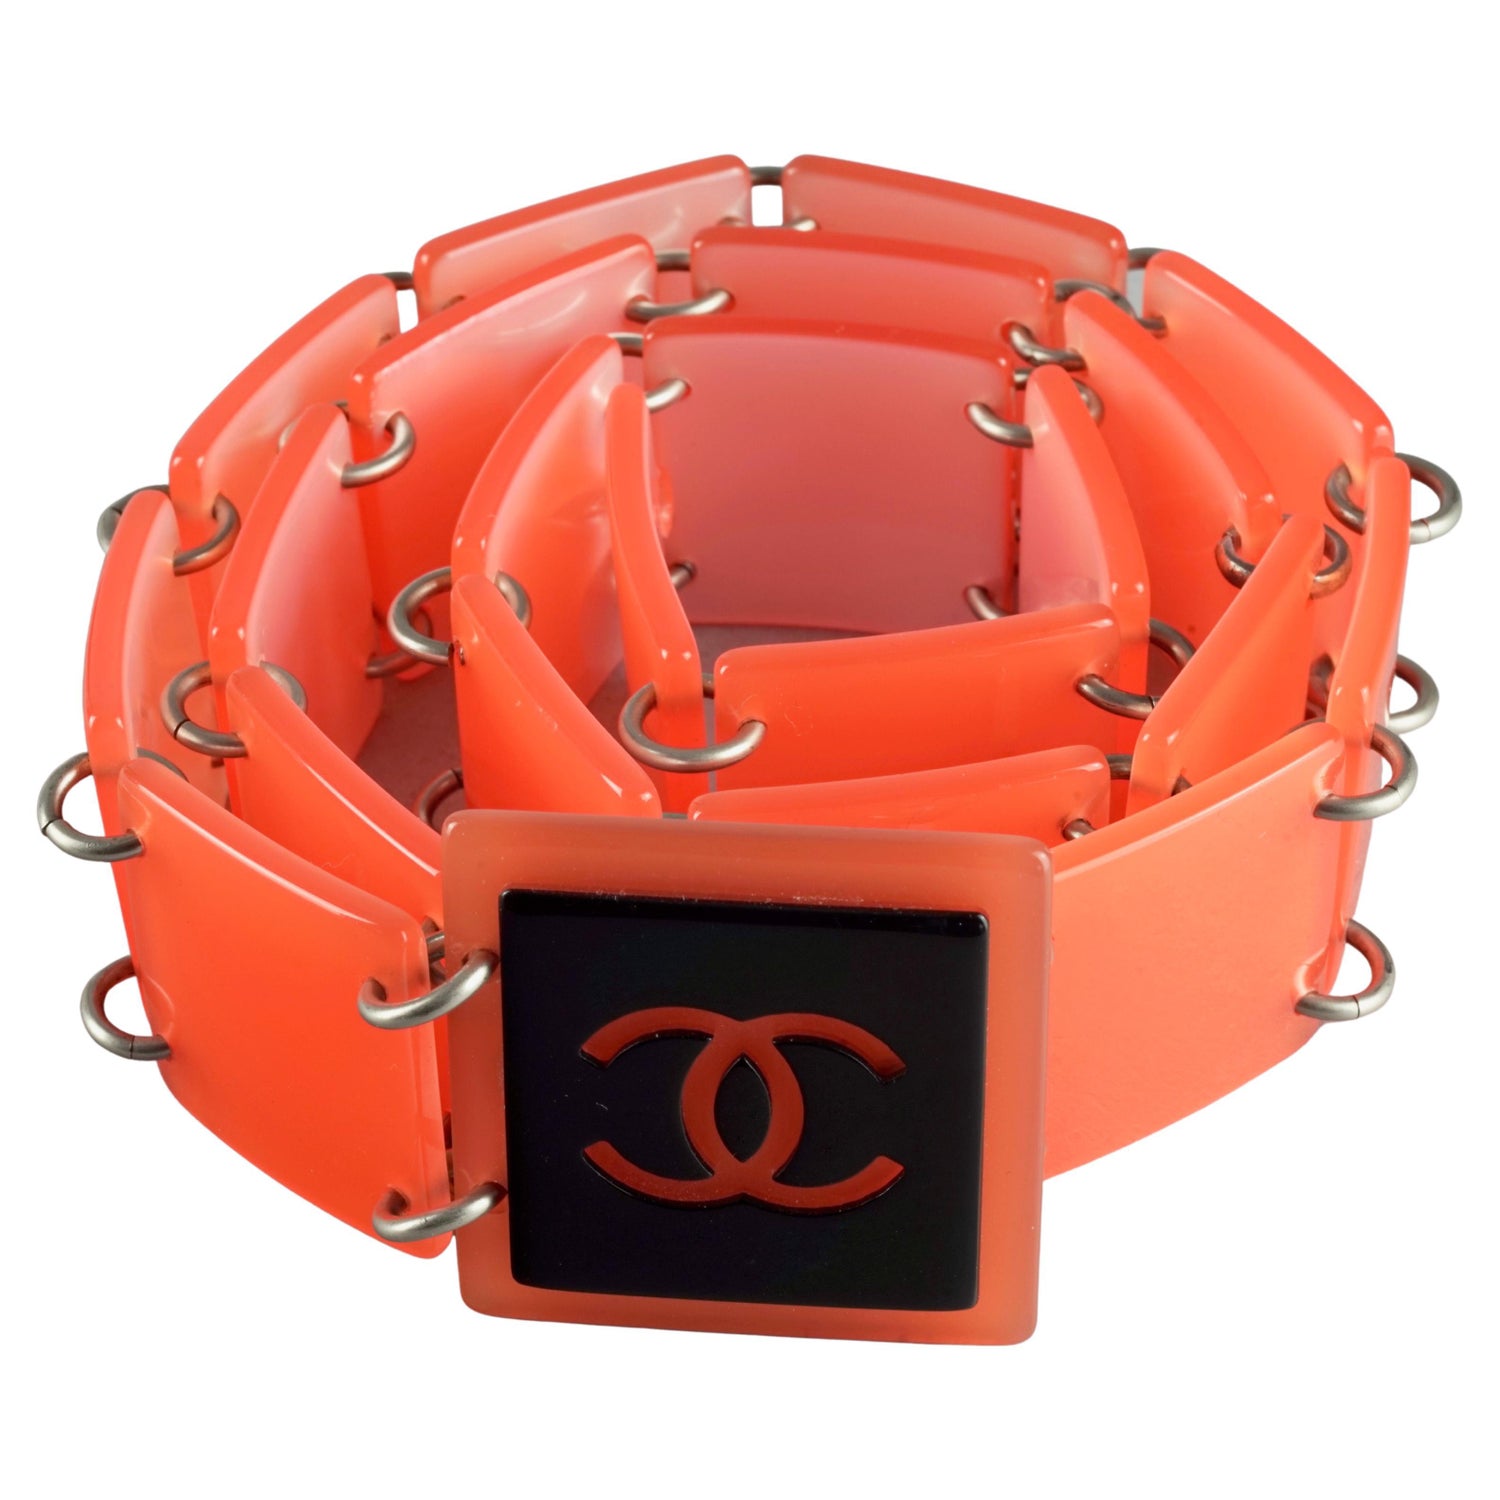 Louis Vuitton Red Epi Leather Ceinture Belt 863440 For Sale at